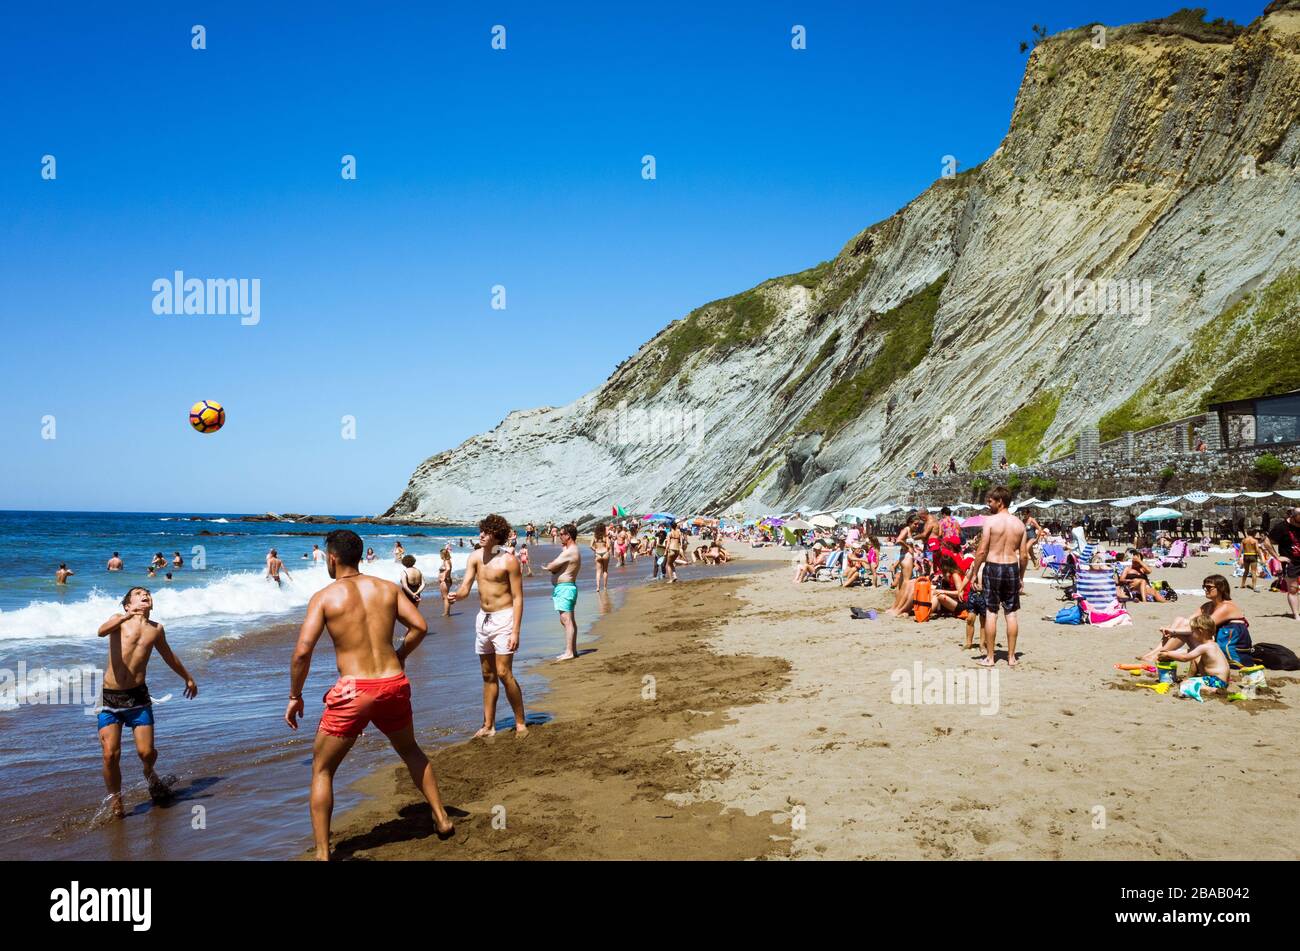 Zumaia, Gipuzkoa, Basque Country, Spain - July 15th, 2019 : Beach goers play ball on the shore at Itzurun Beach. Stock Photo